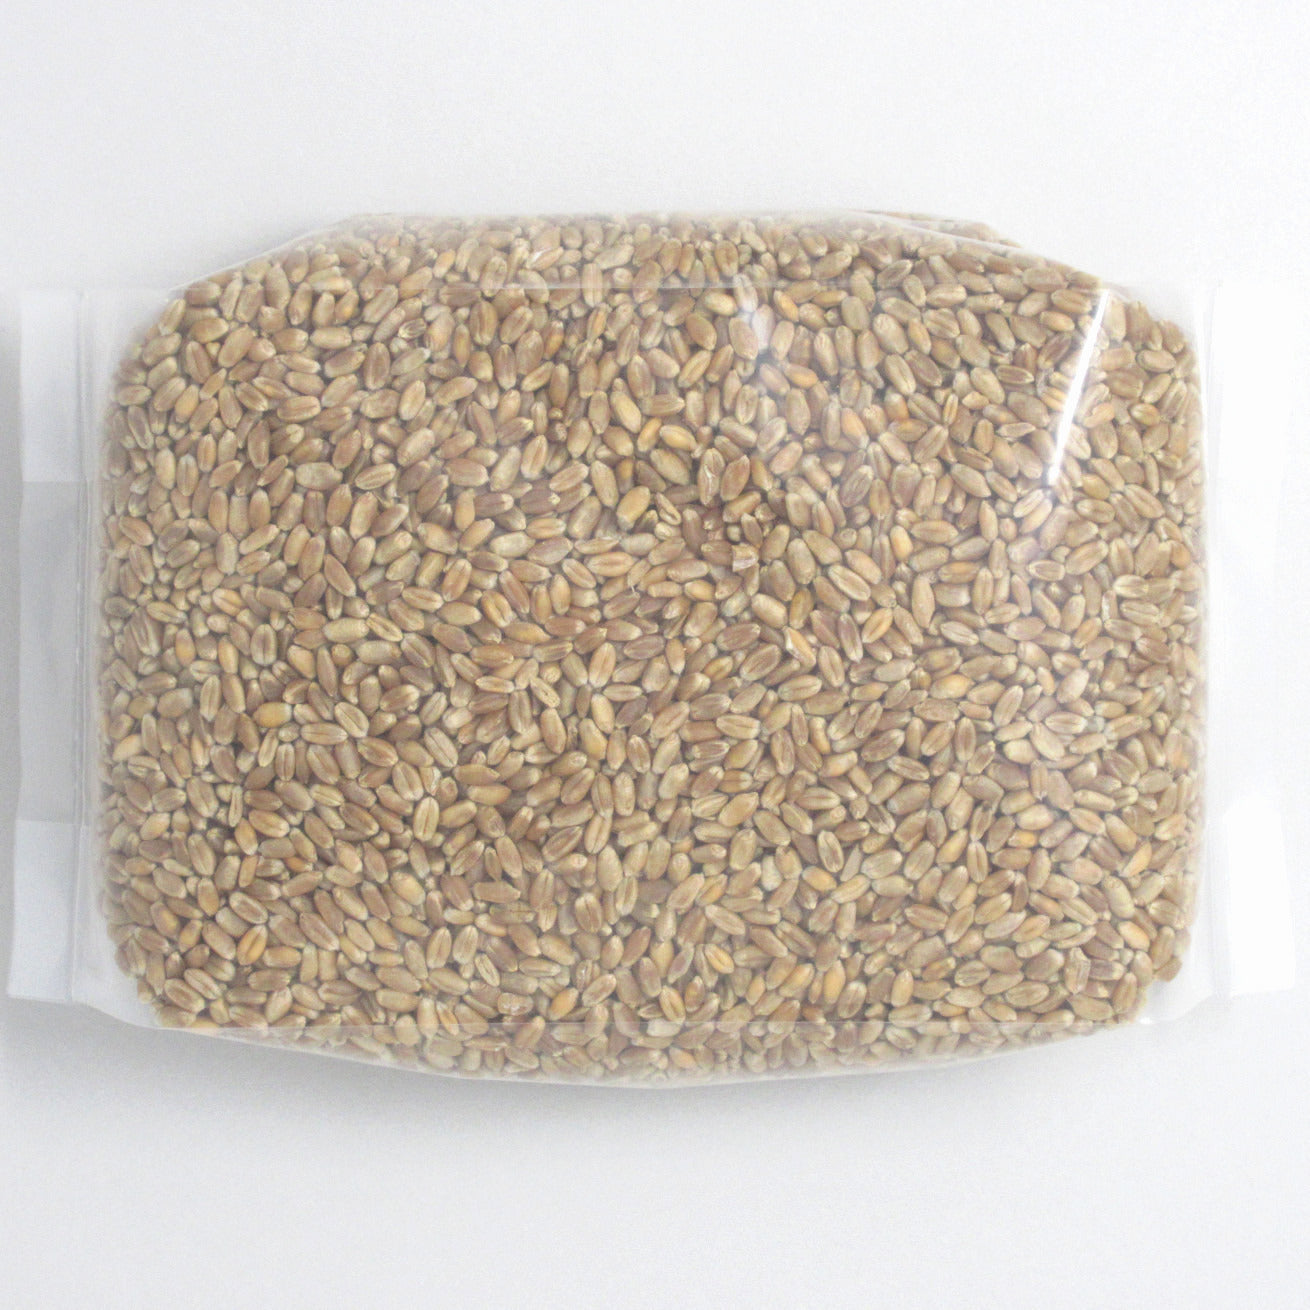 Flour Barrel product image - Wheat Kernels Hard